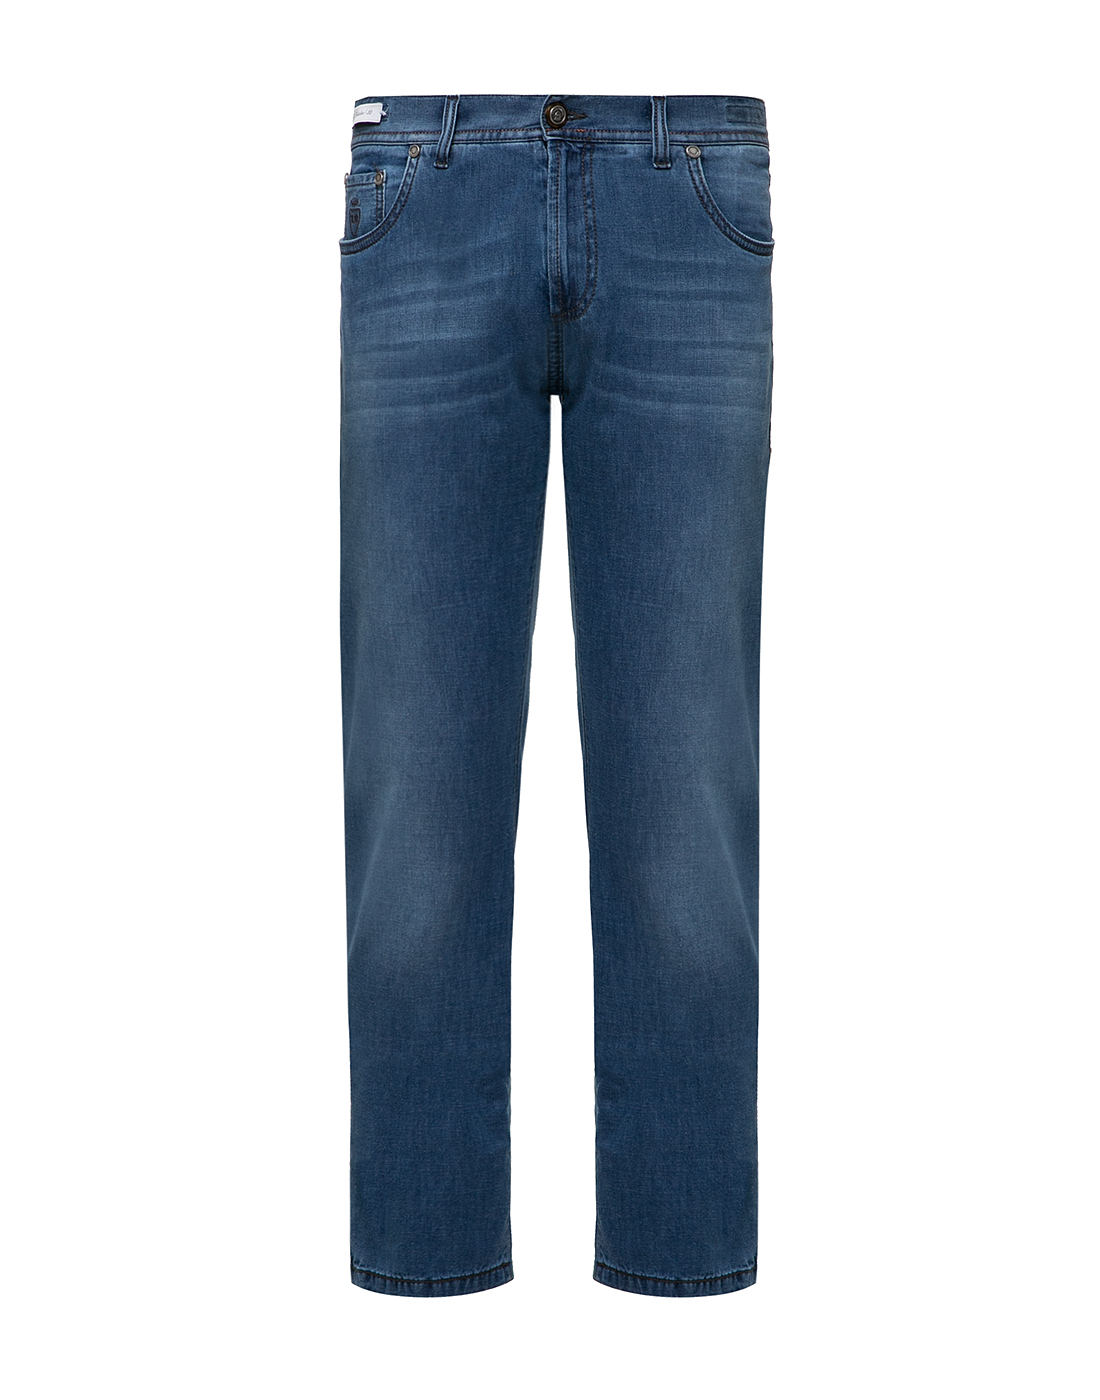 Мужские синие джинсы Tokyo Richard J. Brown ST94.W230-1